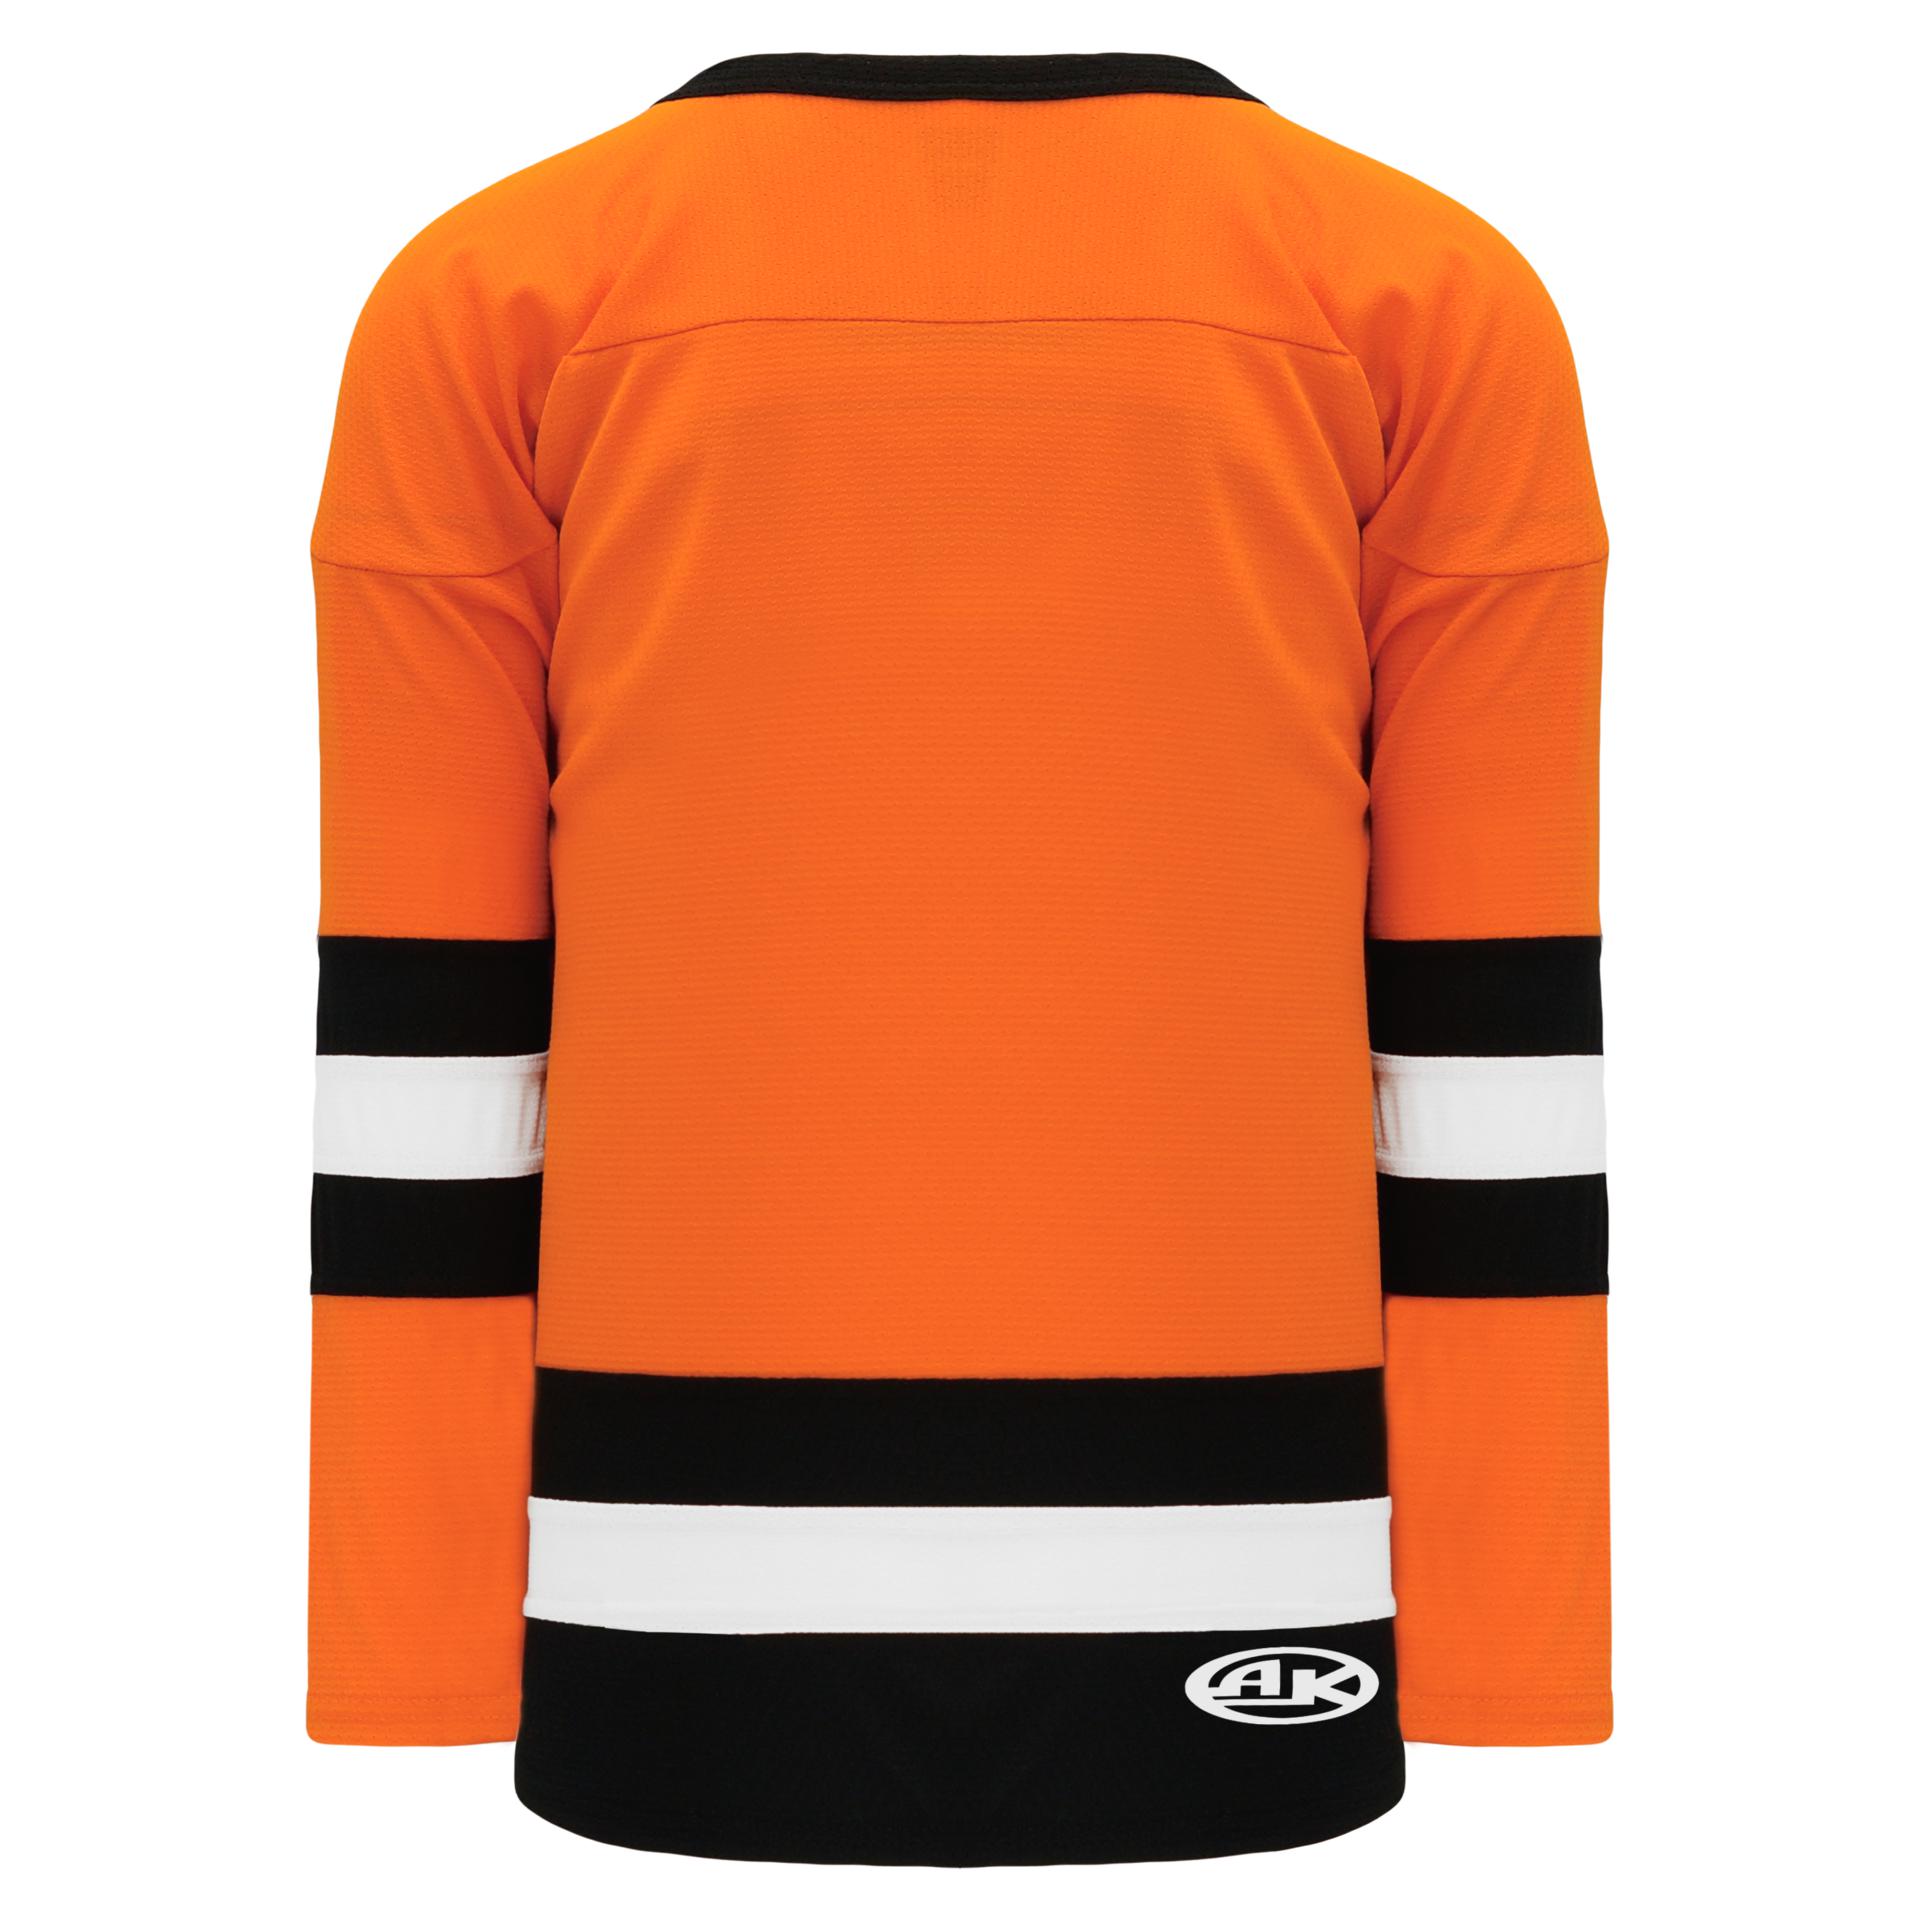 NHL Anaheim Ducks Jersey Adult Large XL Black Orange Logo Official Product